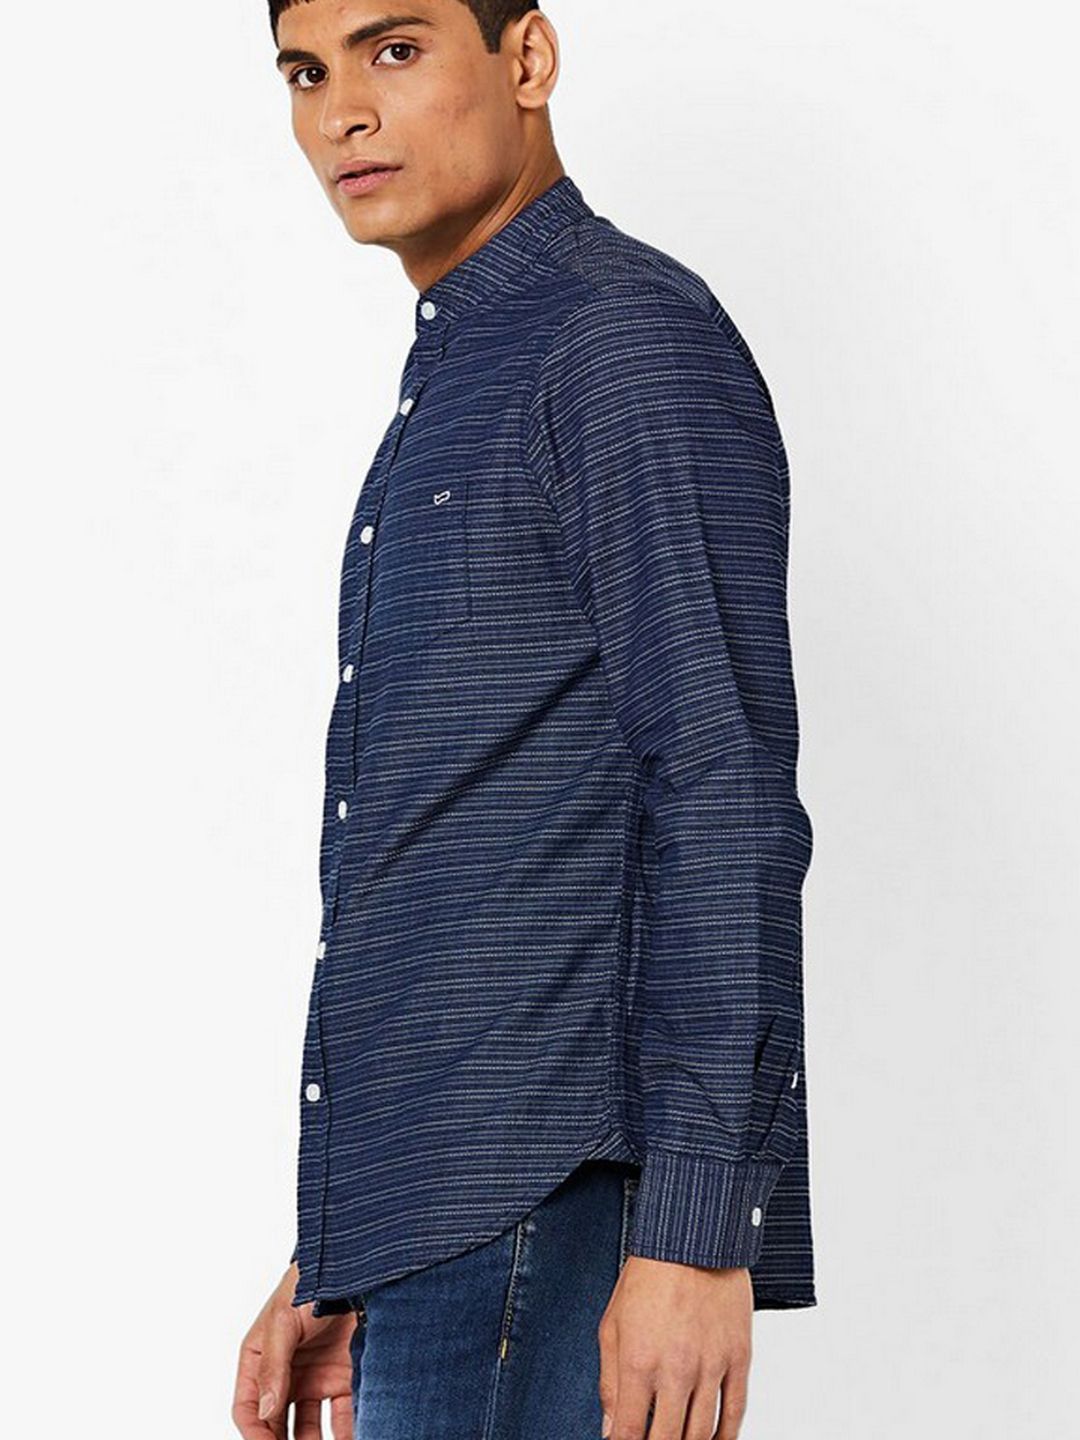 Men's Dyami S navy blue jacquard stripes shirt